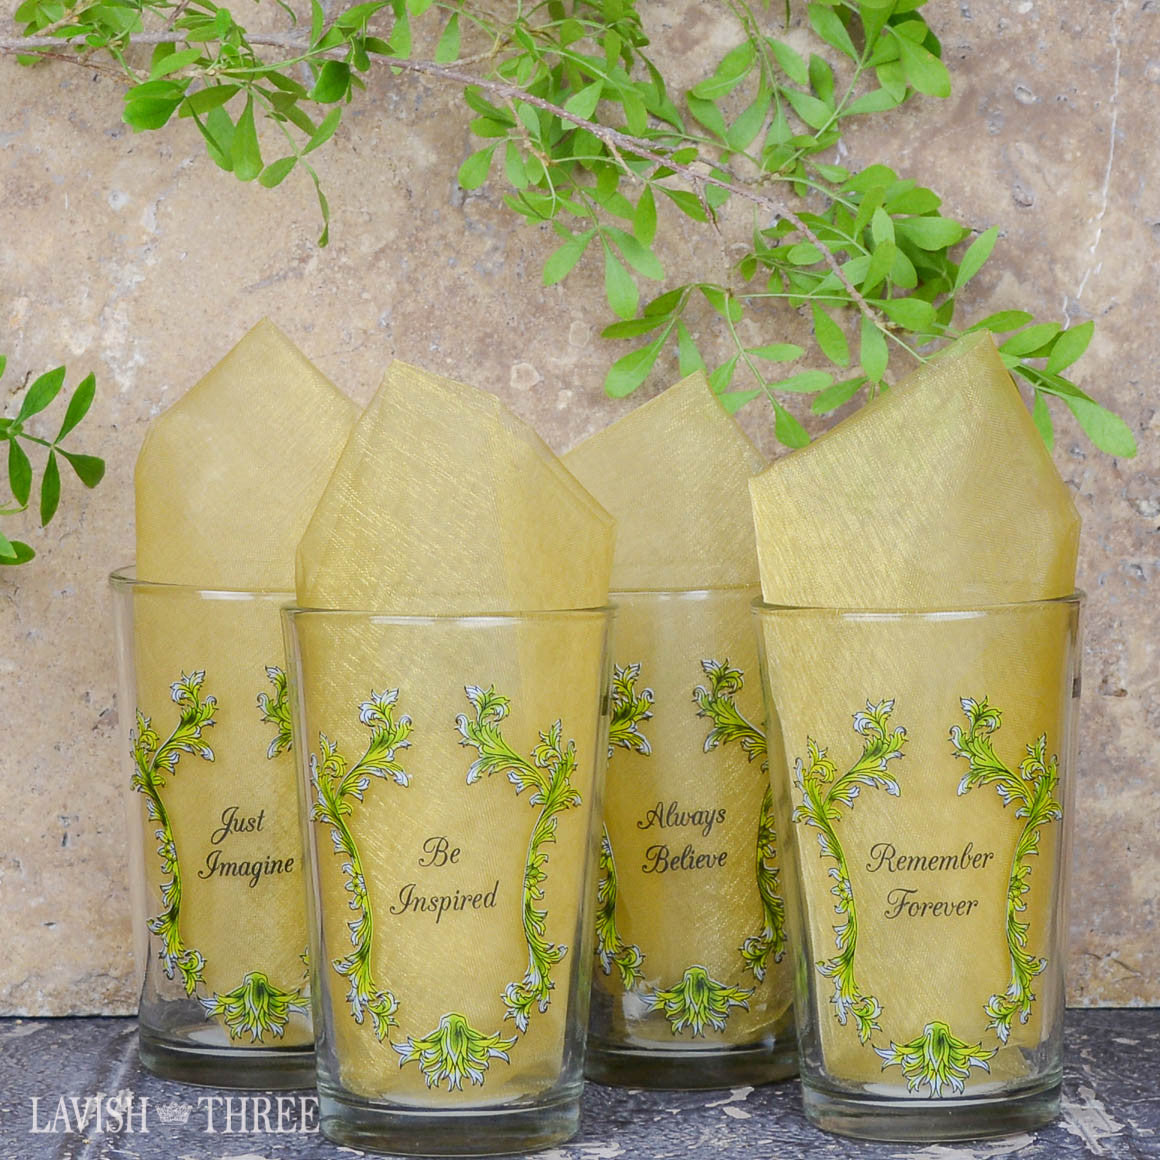 Royal crown mini orange juice glasses with inspirational sayings lavish three 3